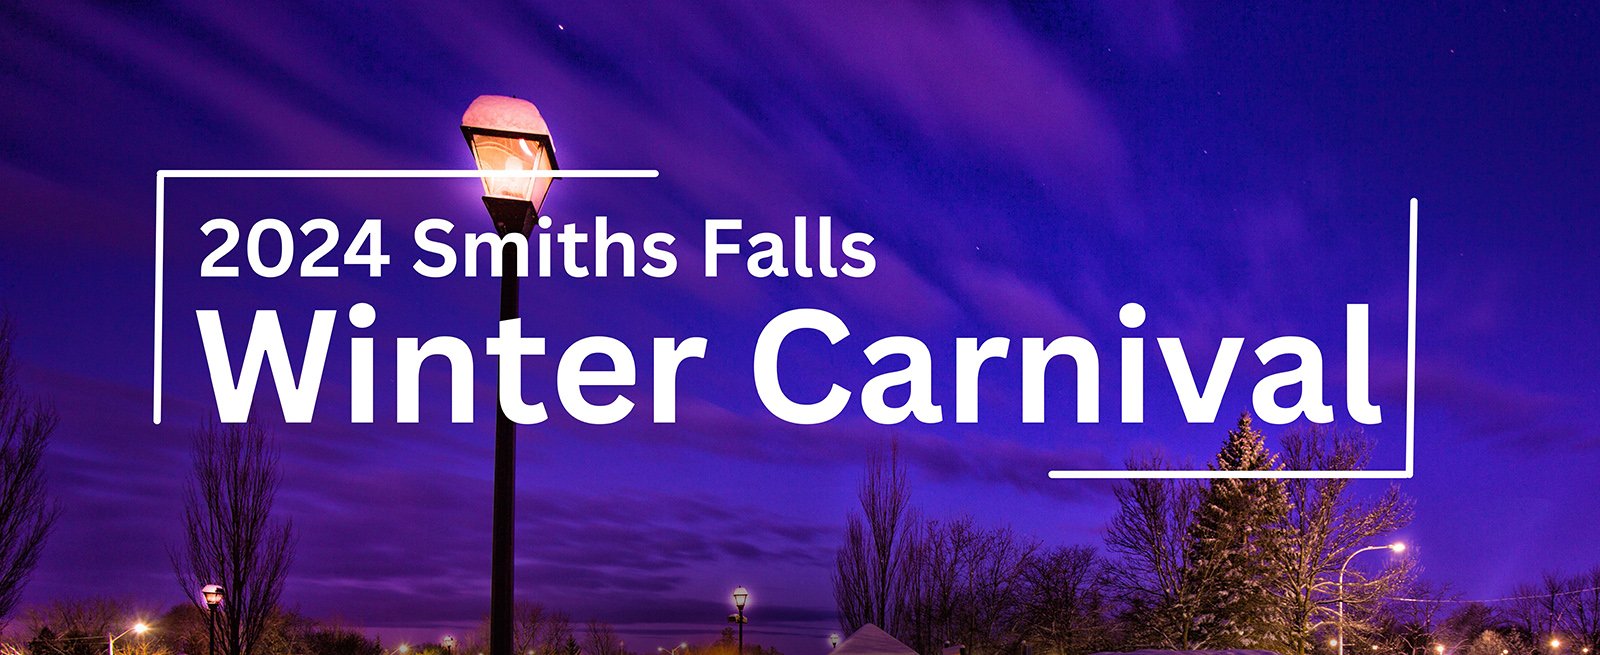 Smiths Falls Winter Carnival 2024